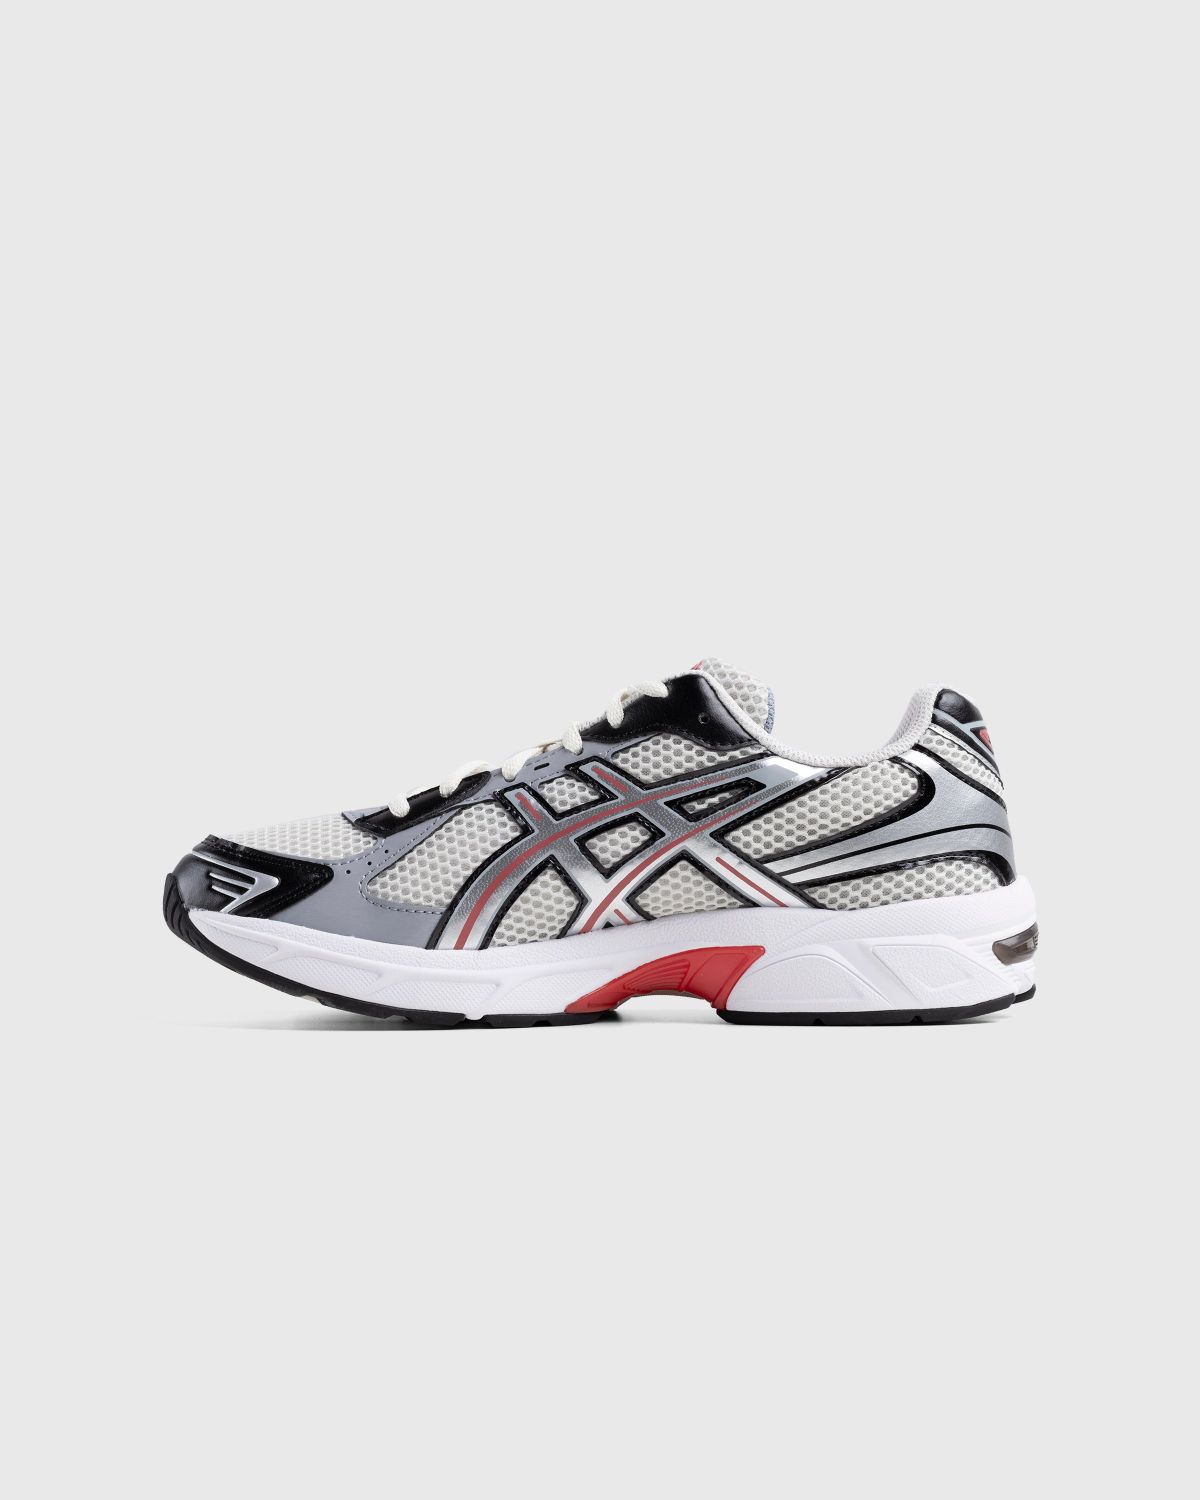 asics – Gel-1130 Smoke Grey Pure Silver - Low Top Sneakers - Multi - Image 2